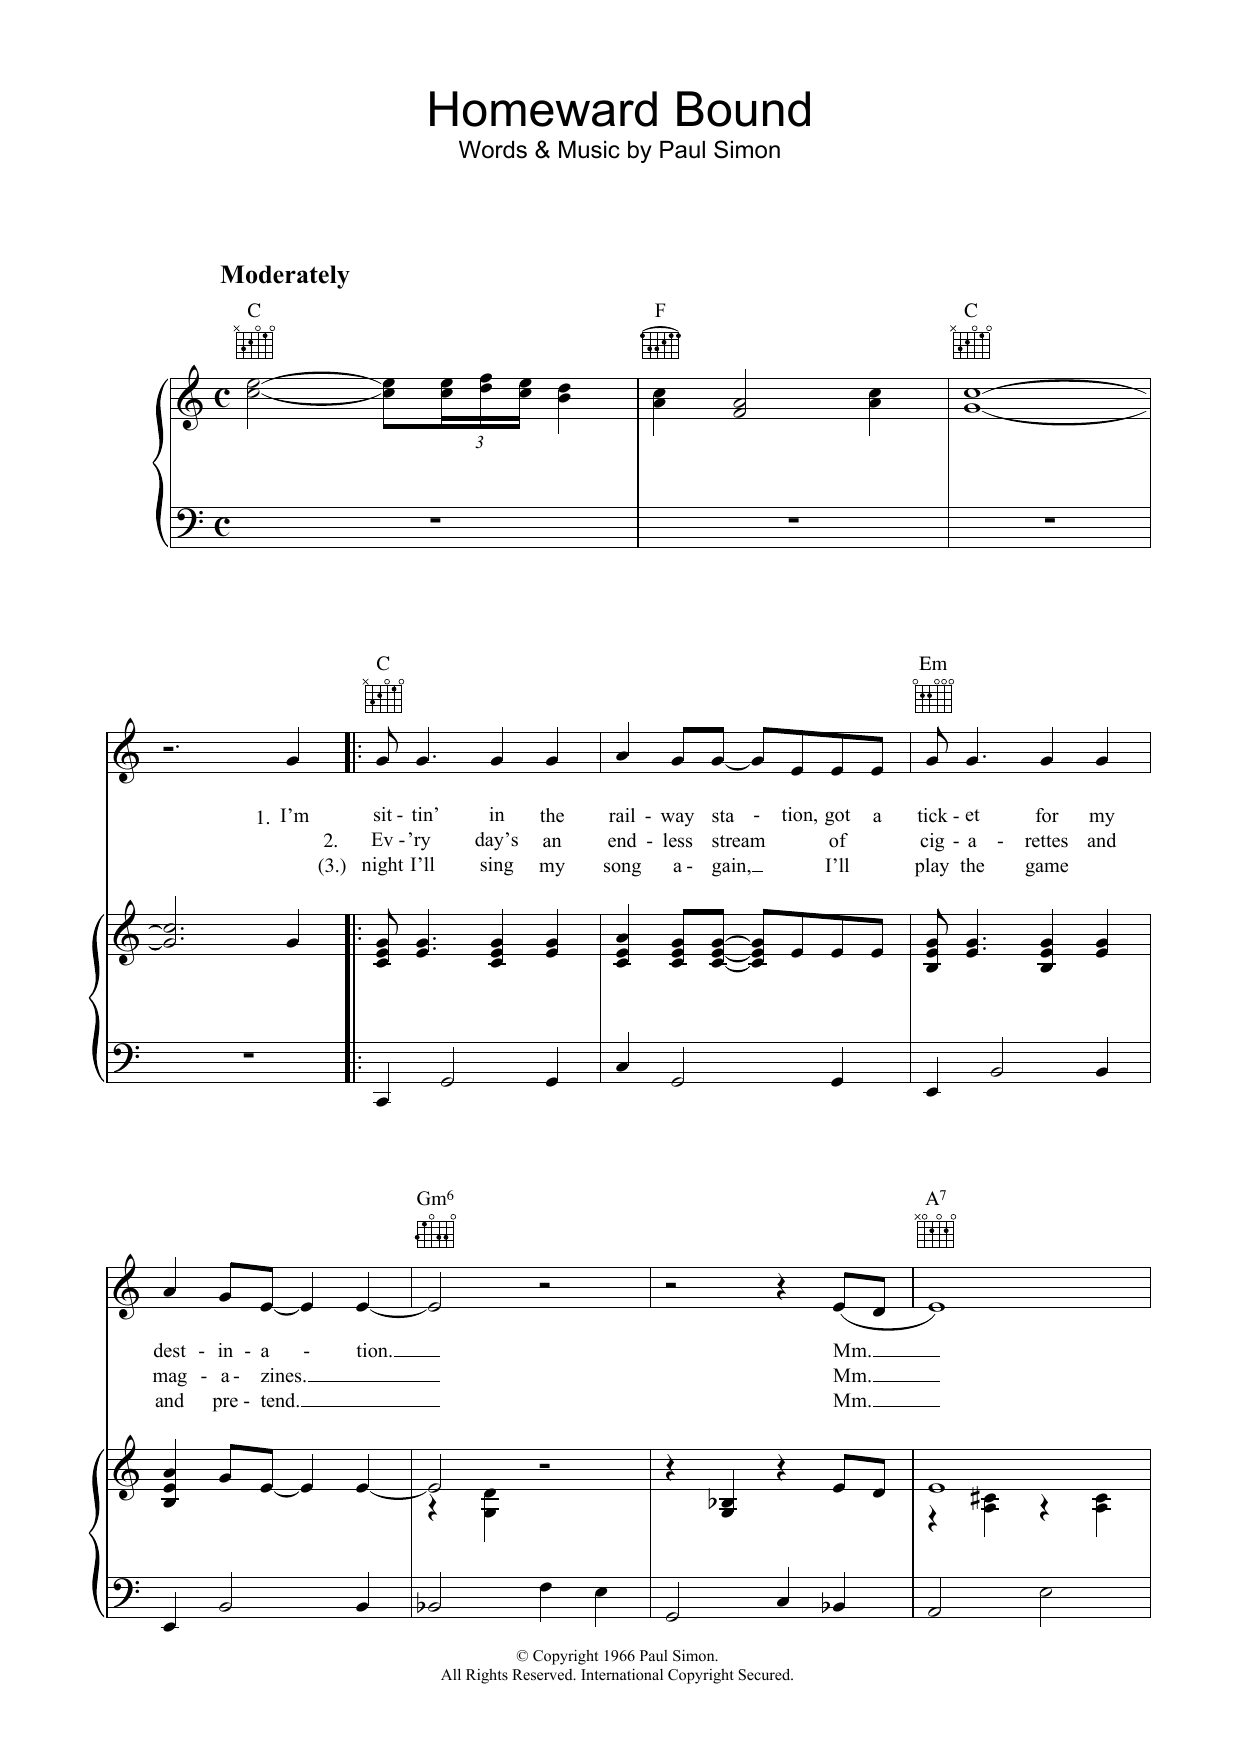 Download Simon & Garfunkel Homeward Bound Sheet Music and learn how to play Lyrics & Chords PDF digital score in minutes